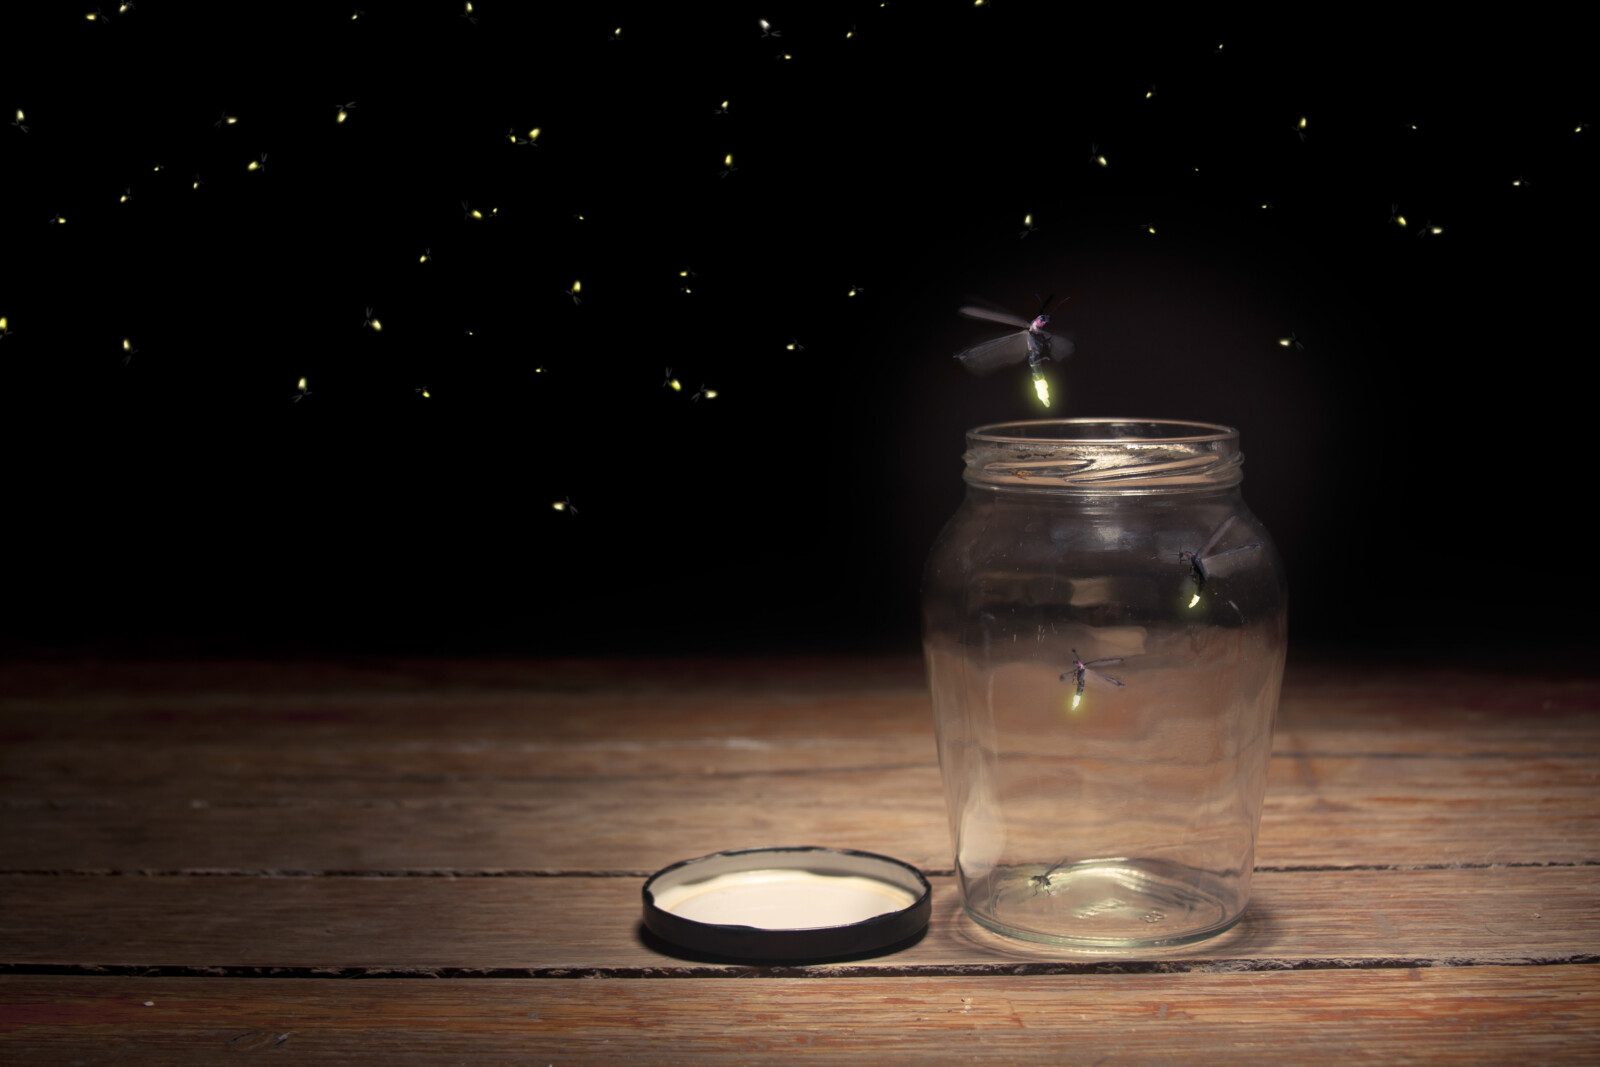 firelies in a jar on a dark background